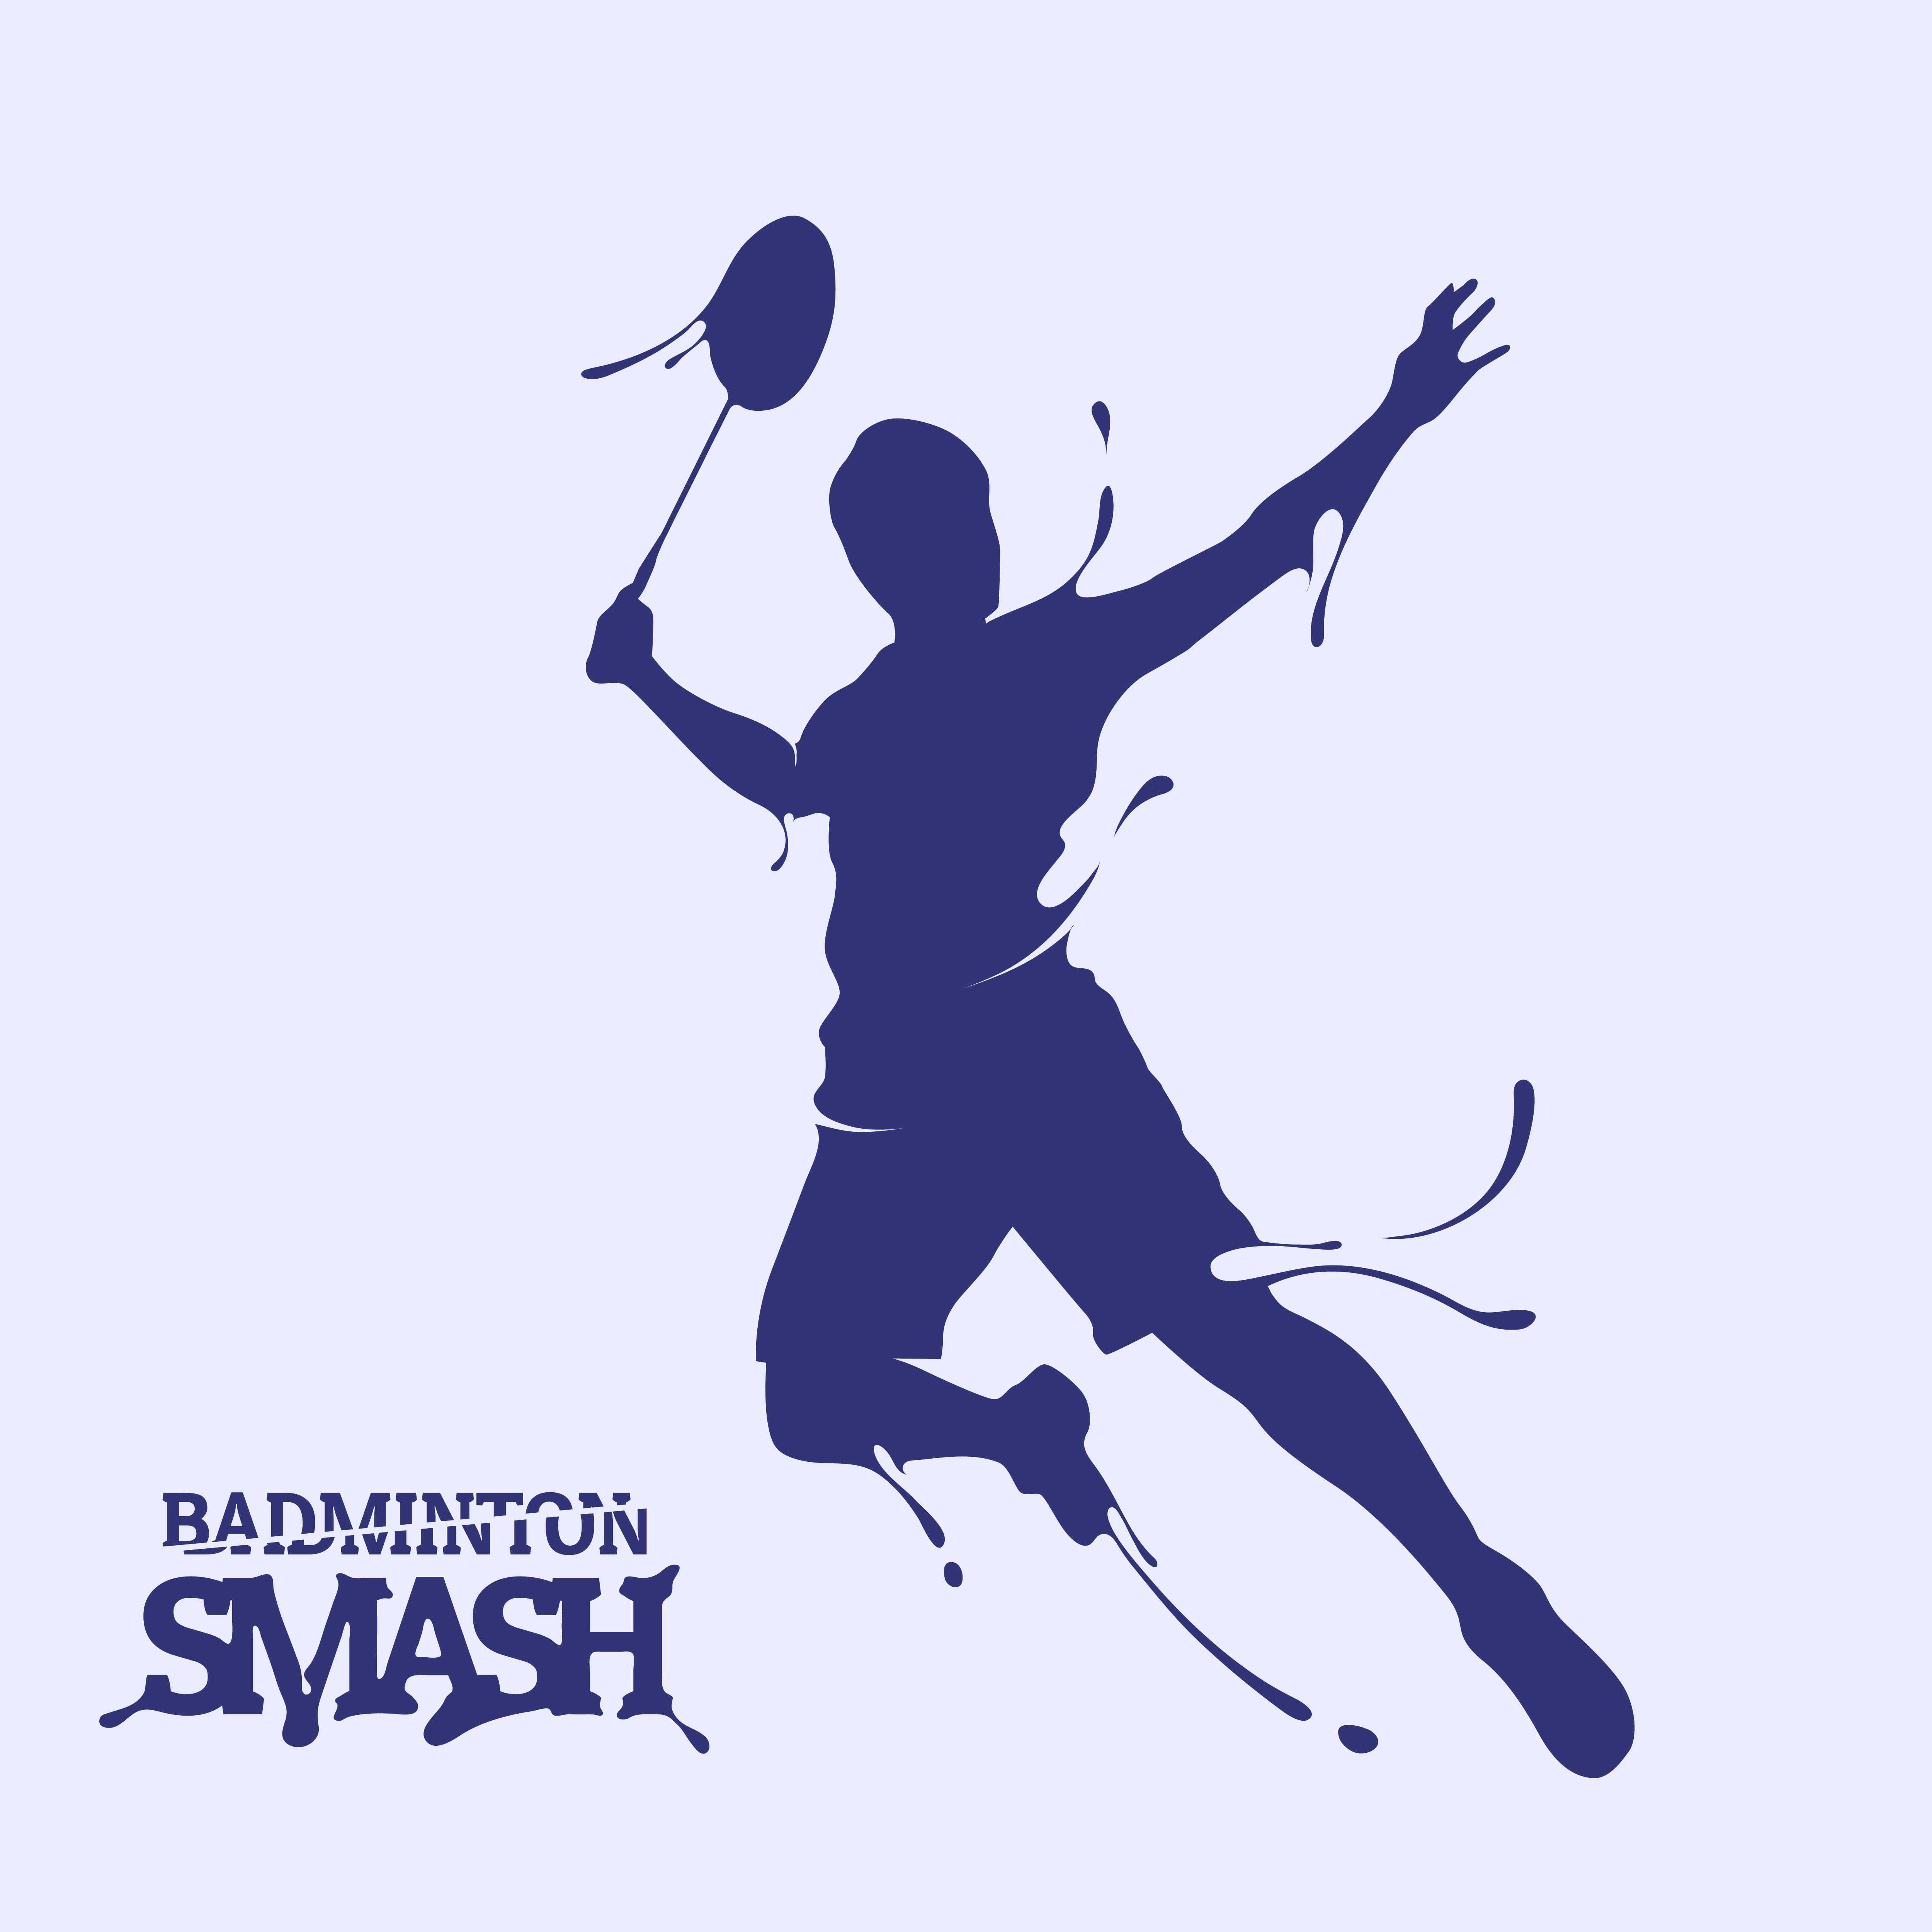 Badminton Smash Free Vector Art 13 Free Downloads